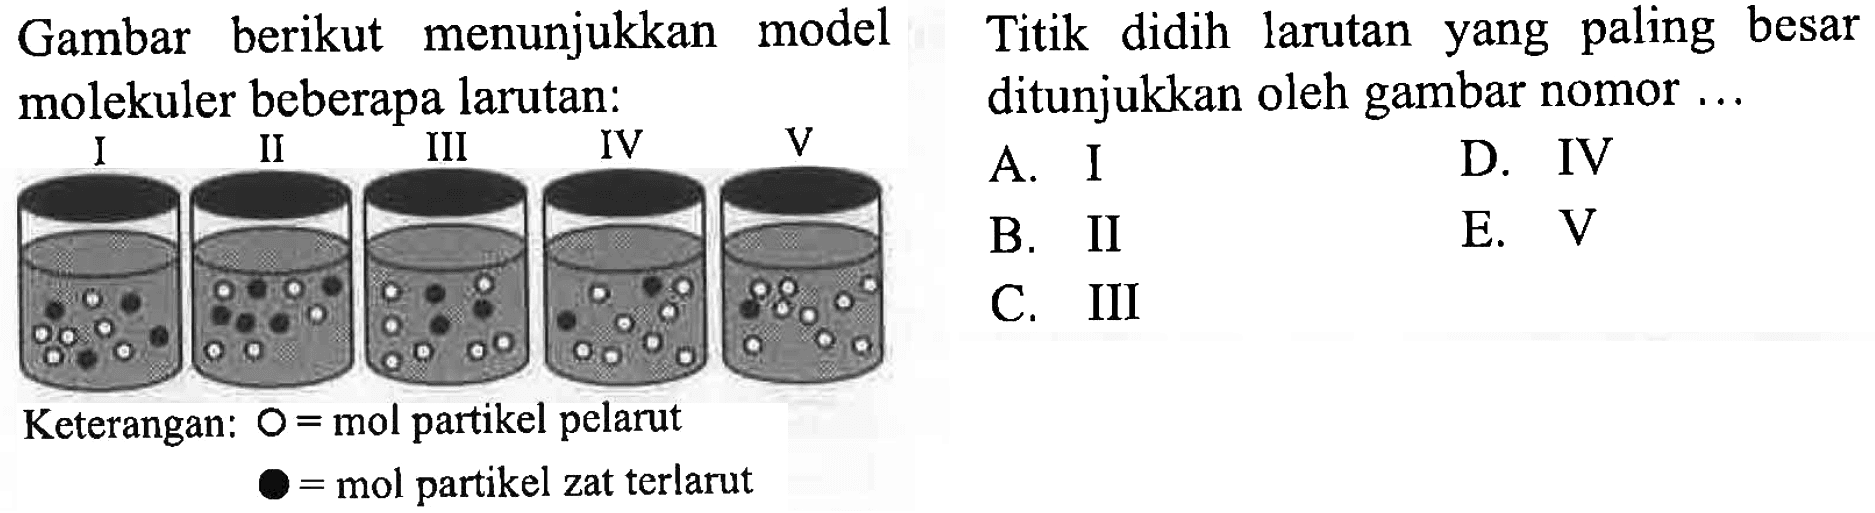 Gambar berikut menunjukkan model molekuler beberapa larutan: I II III IV V Keterangan O = mol partikel pelarut Titik didih larutan yang paling besar ditunjukkan oleh gambar nomor... A. I B. II C. III D. IV E. V